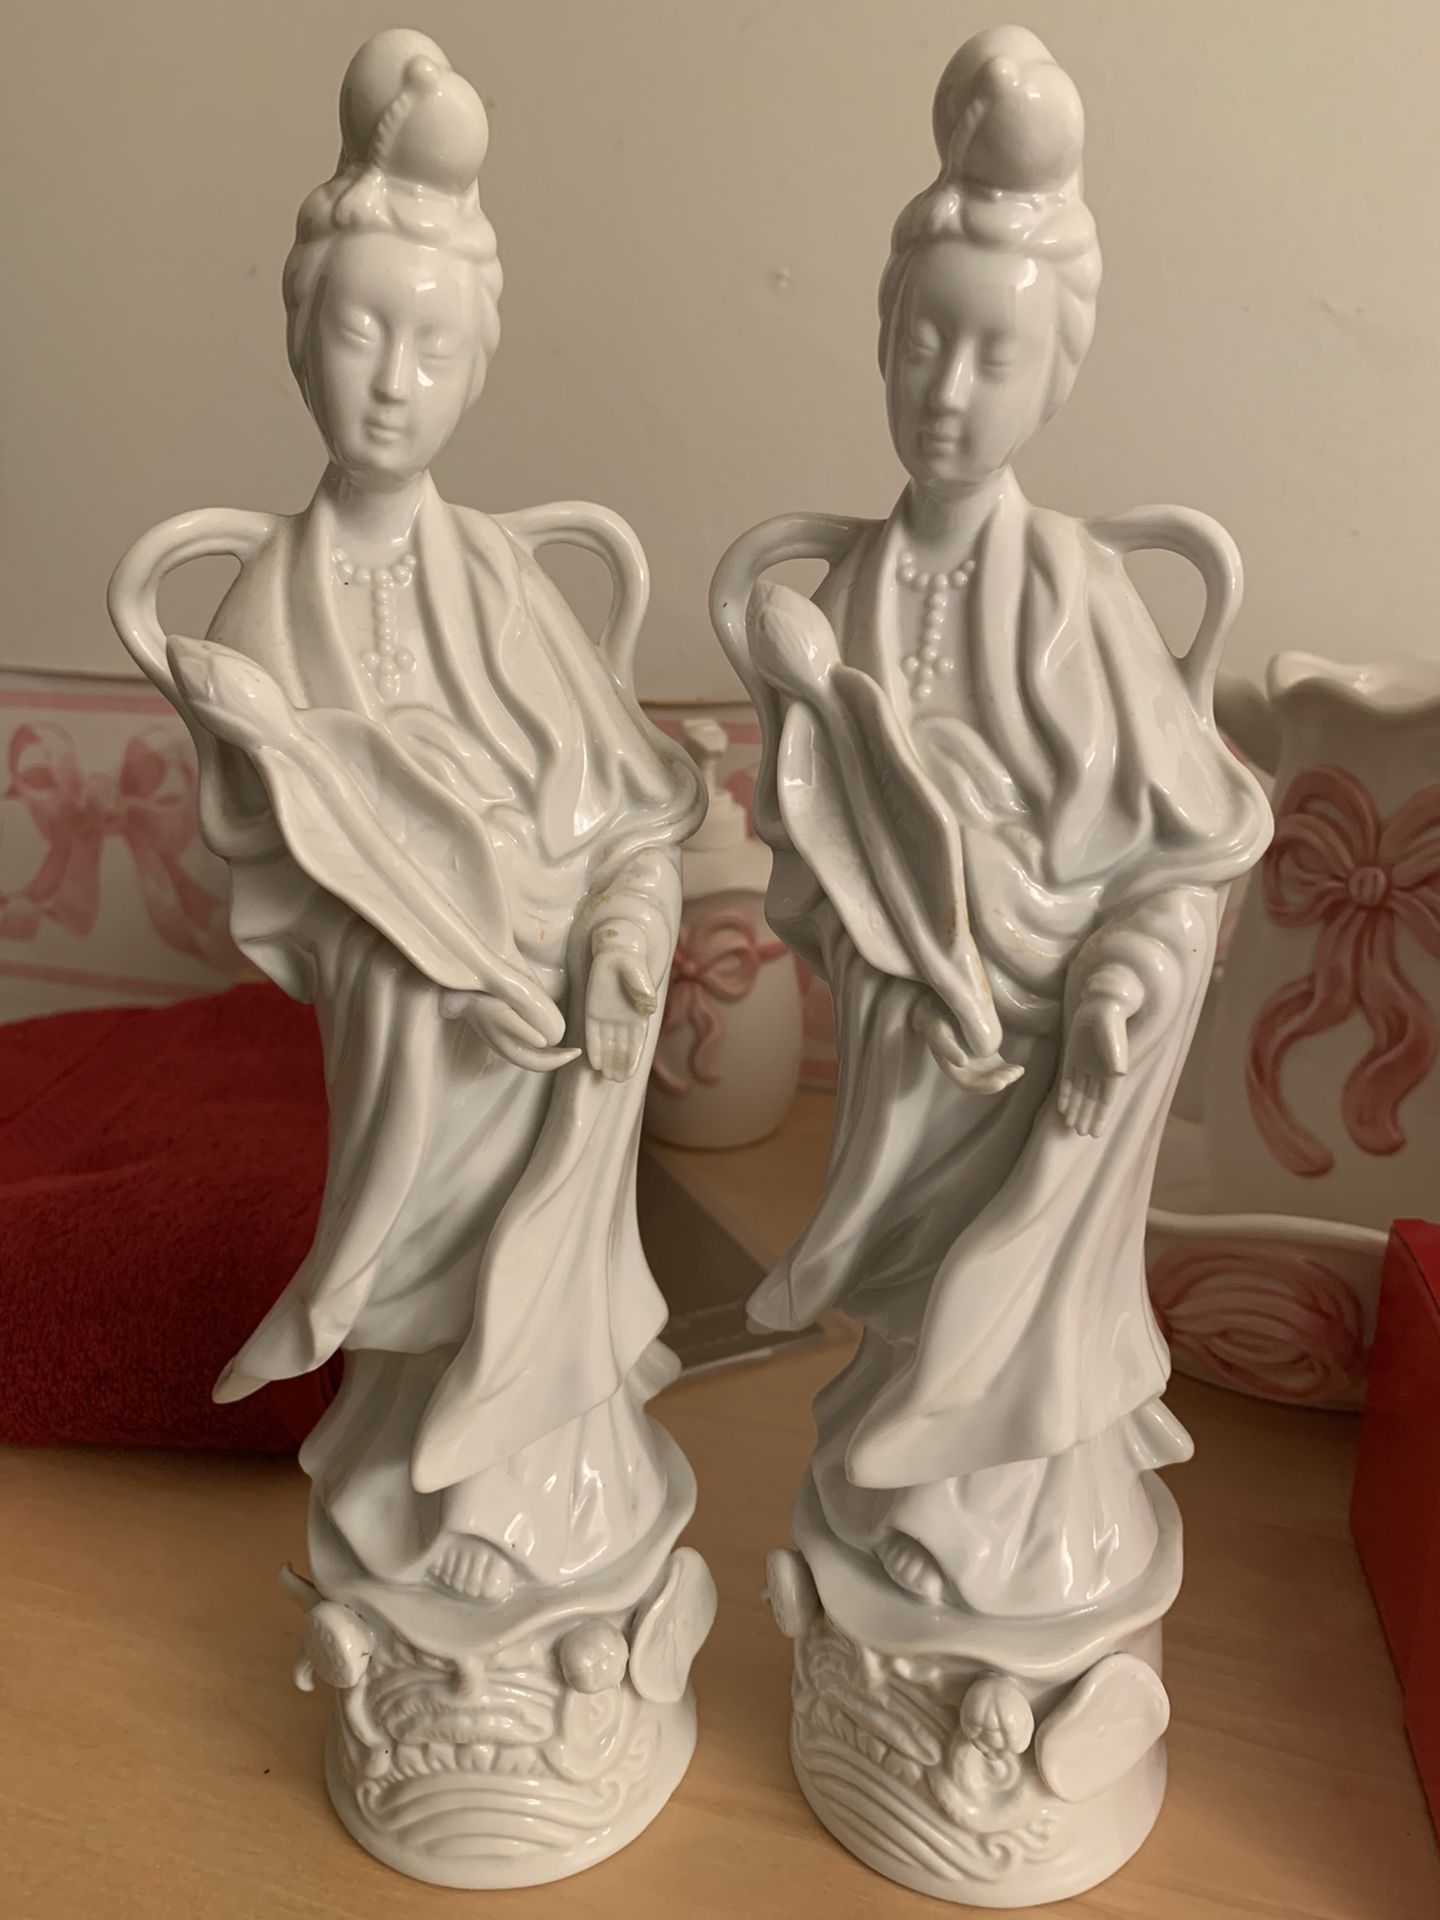 White Porcelain figurines